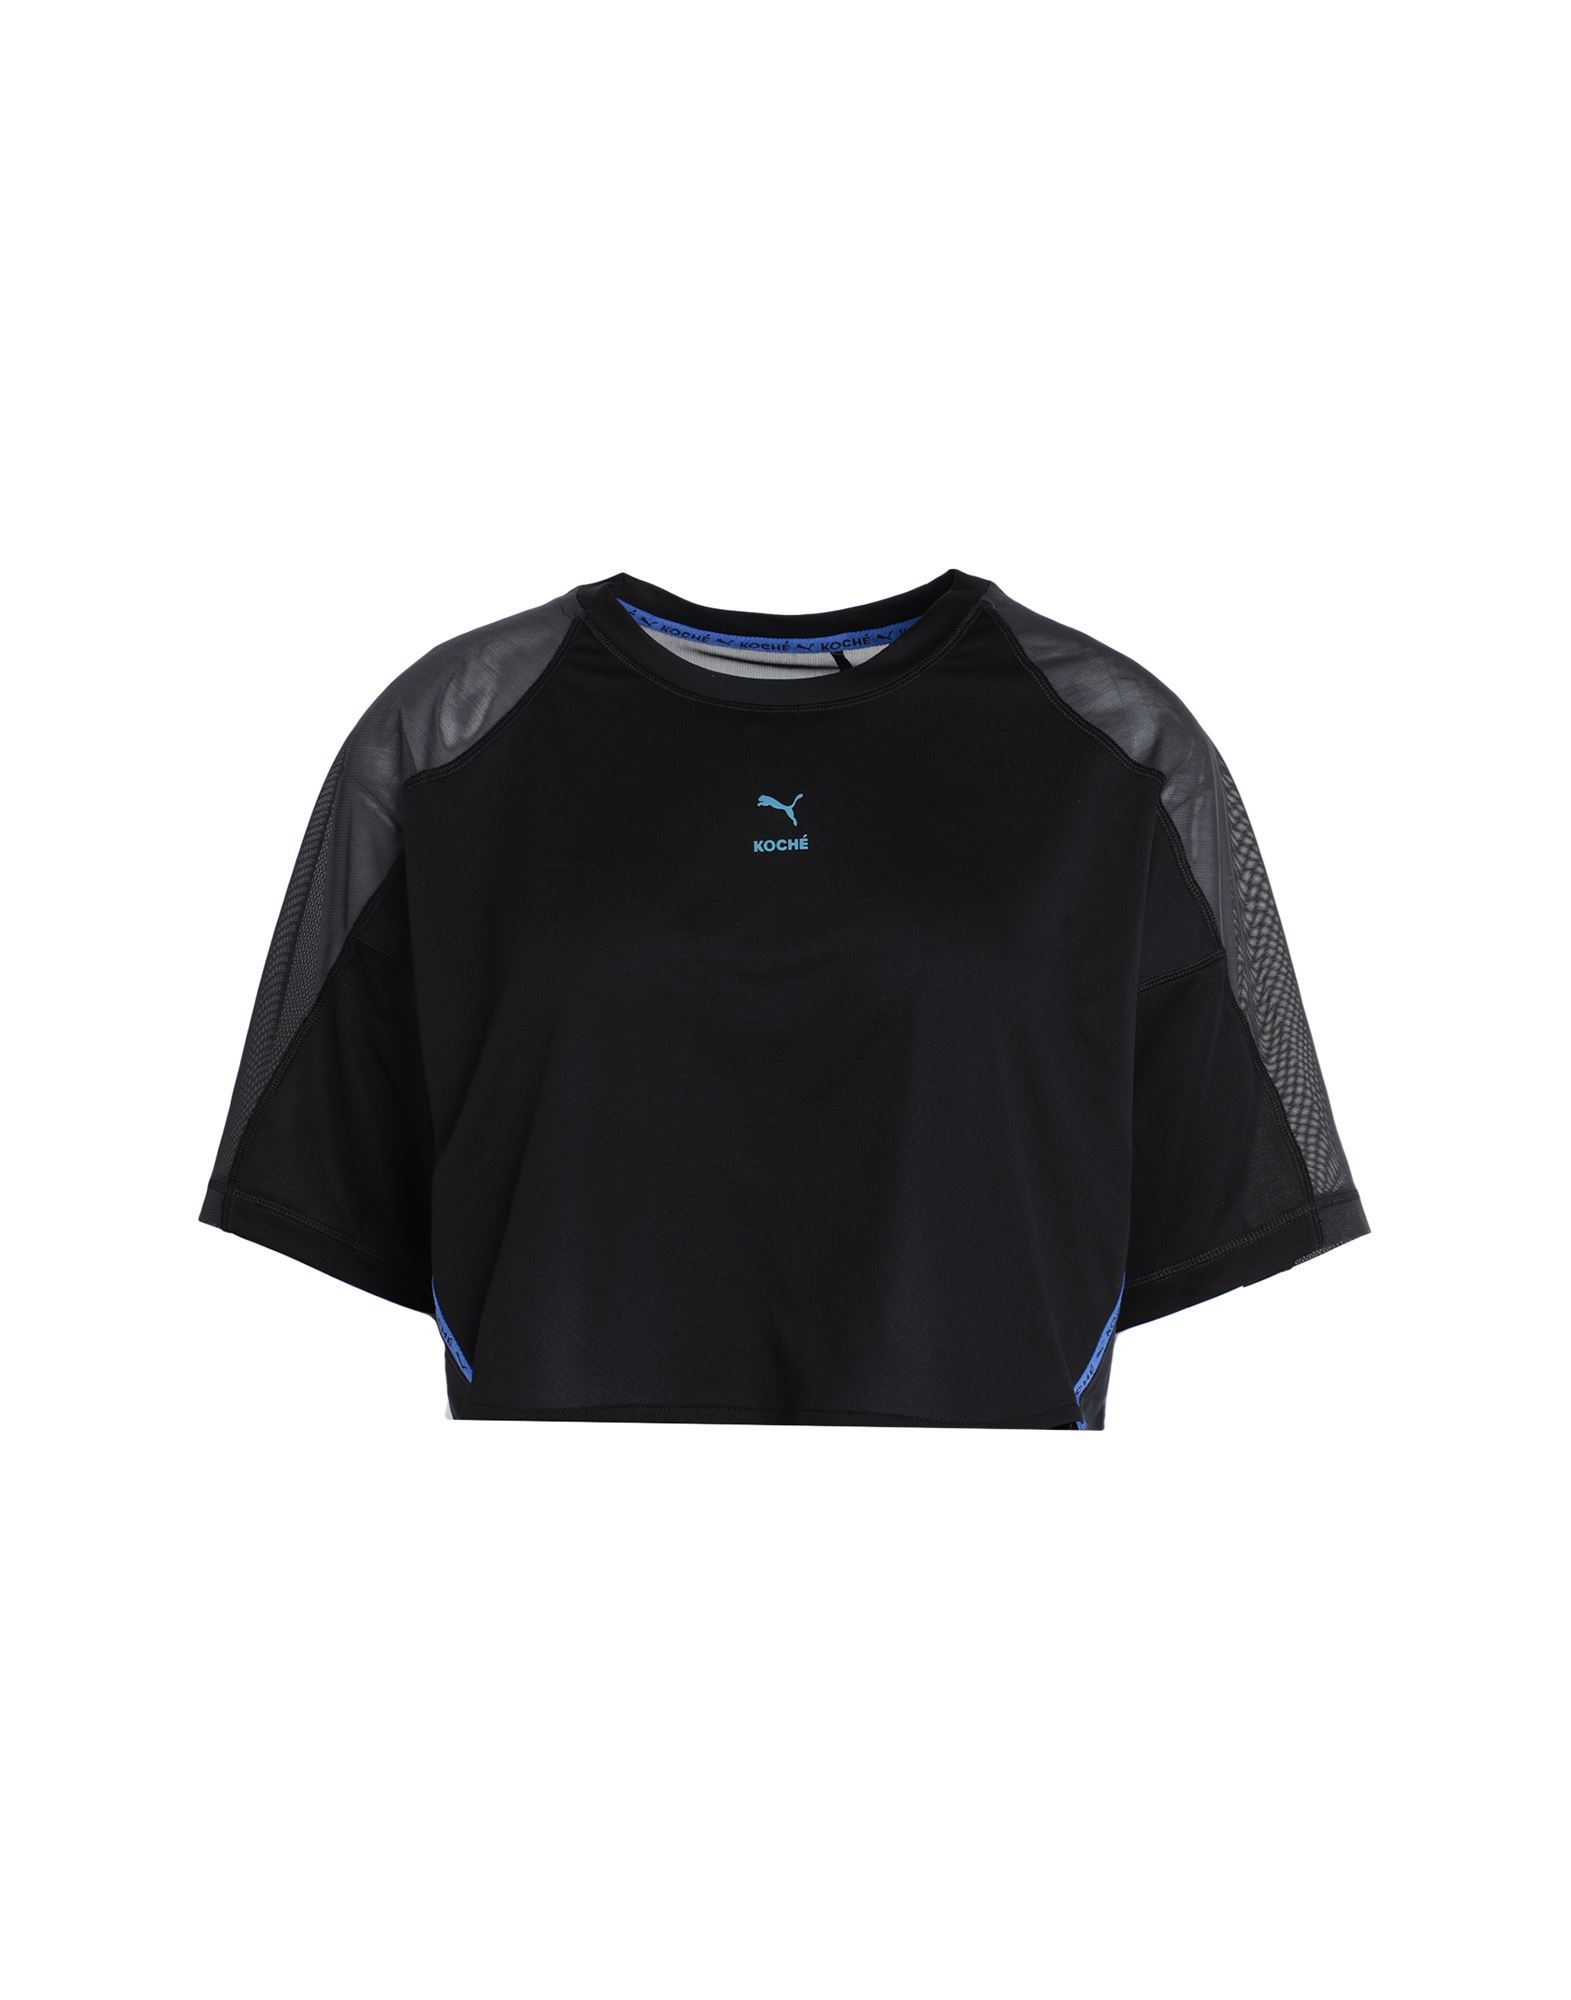 Puma X Koché Cropped Tee Woman T-shirt Black Size M Polyester